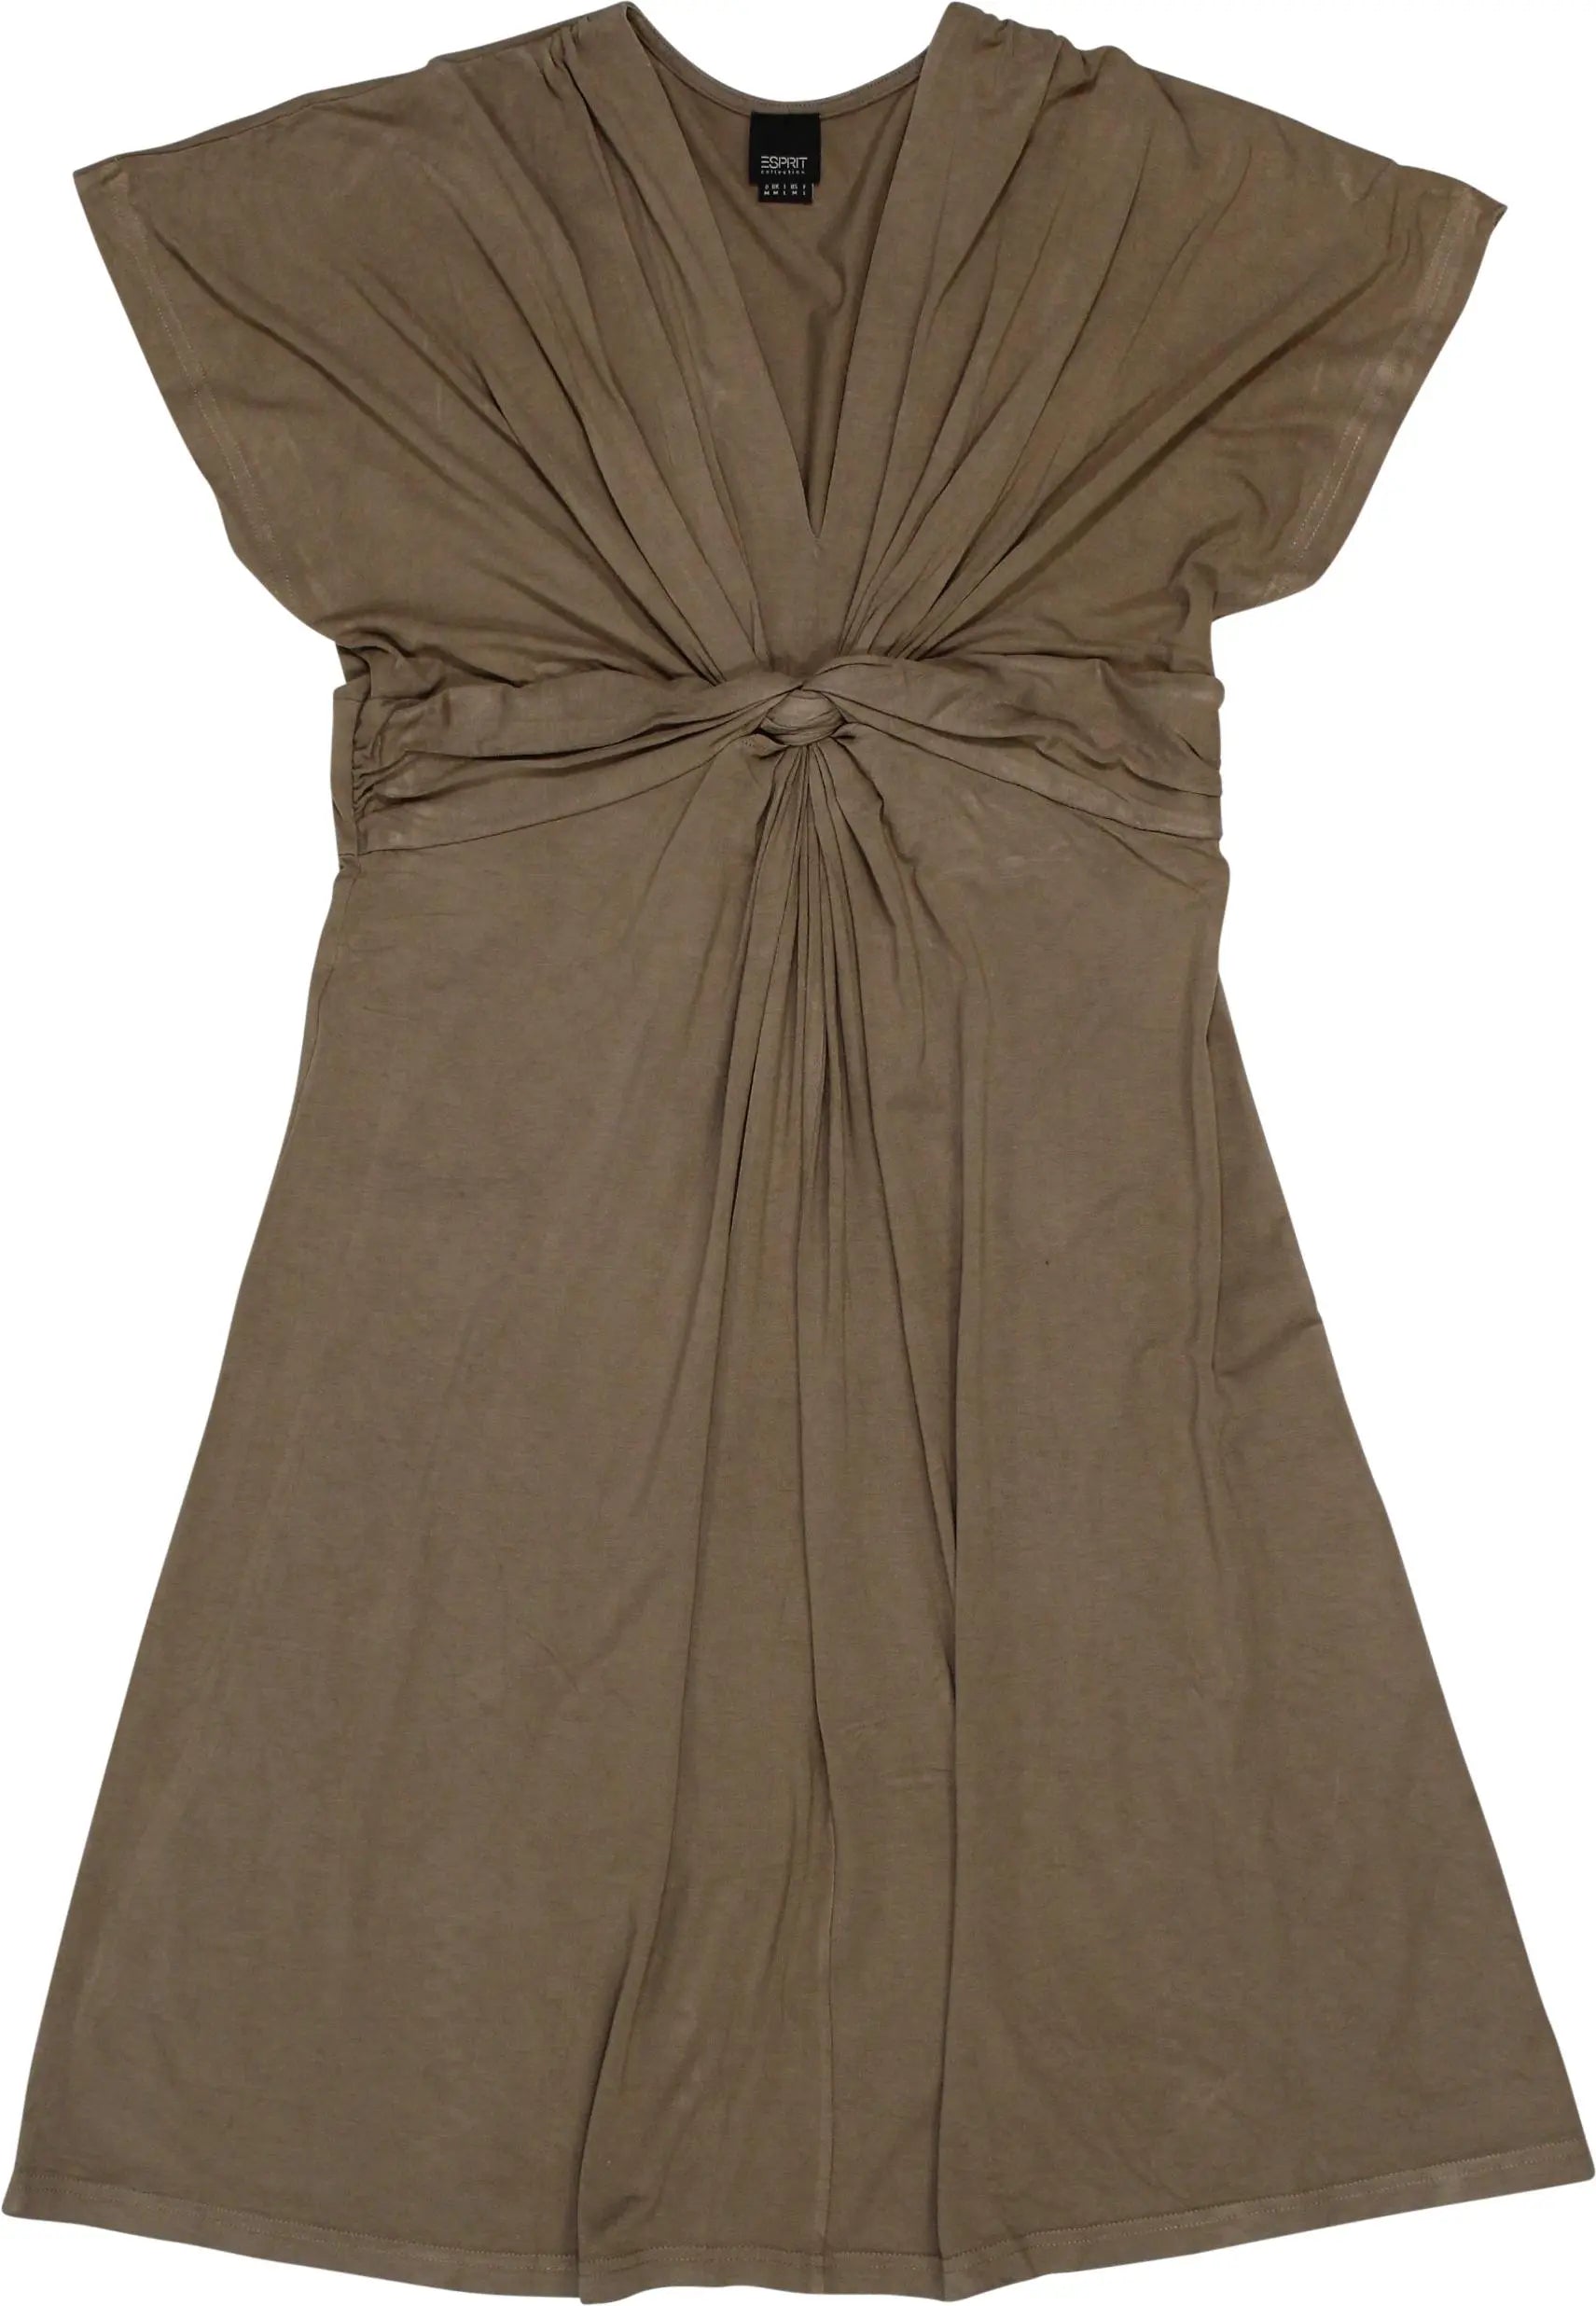 Esprit - Brown Short Dress- ThriftTale.com - Vintage and second handclothing